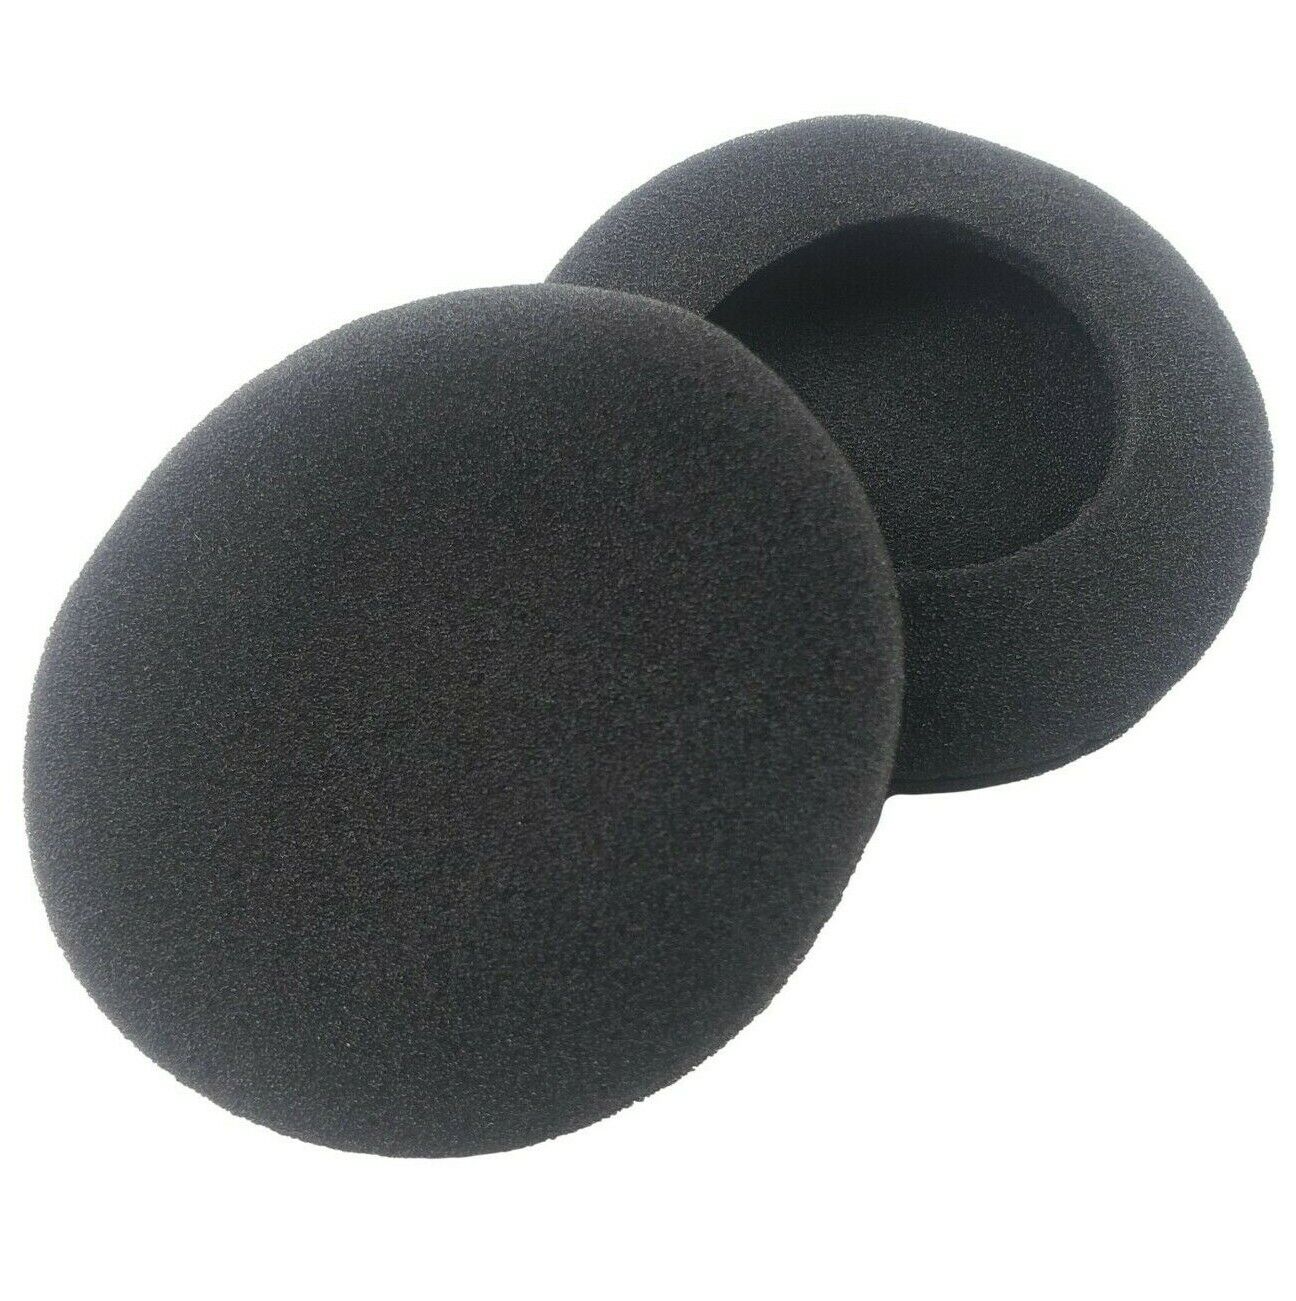 Replacement Foam Pad Ear Cushion Ear Pad Set for Logitech H600 Wireless Headset